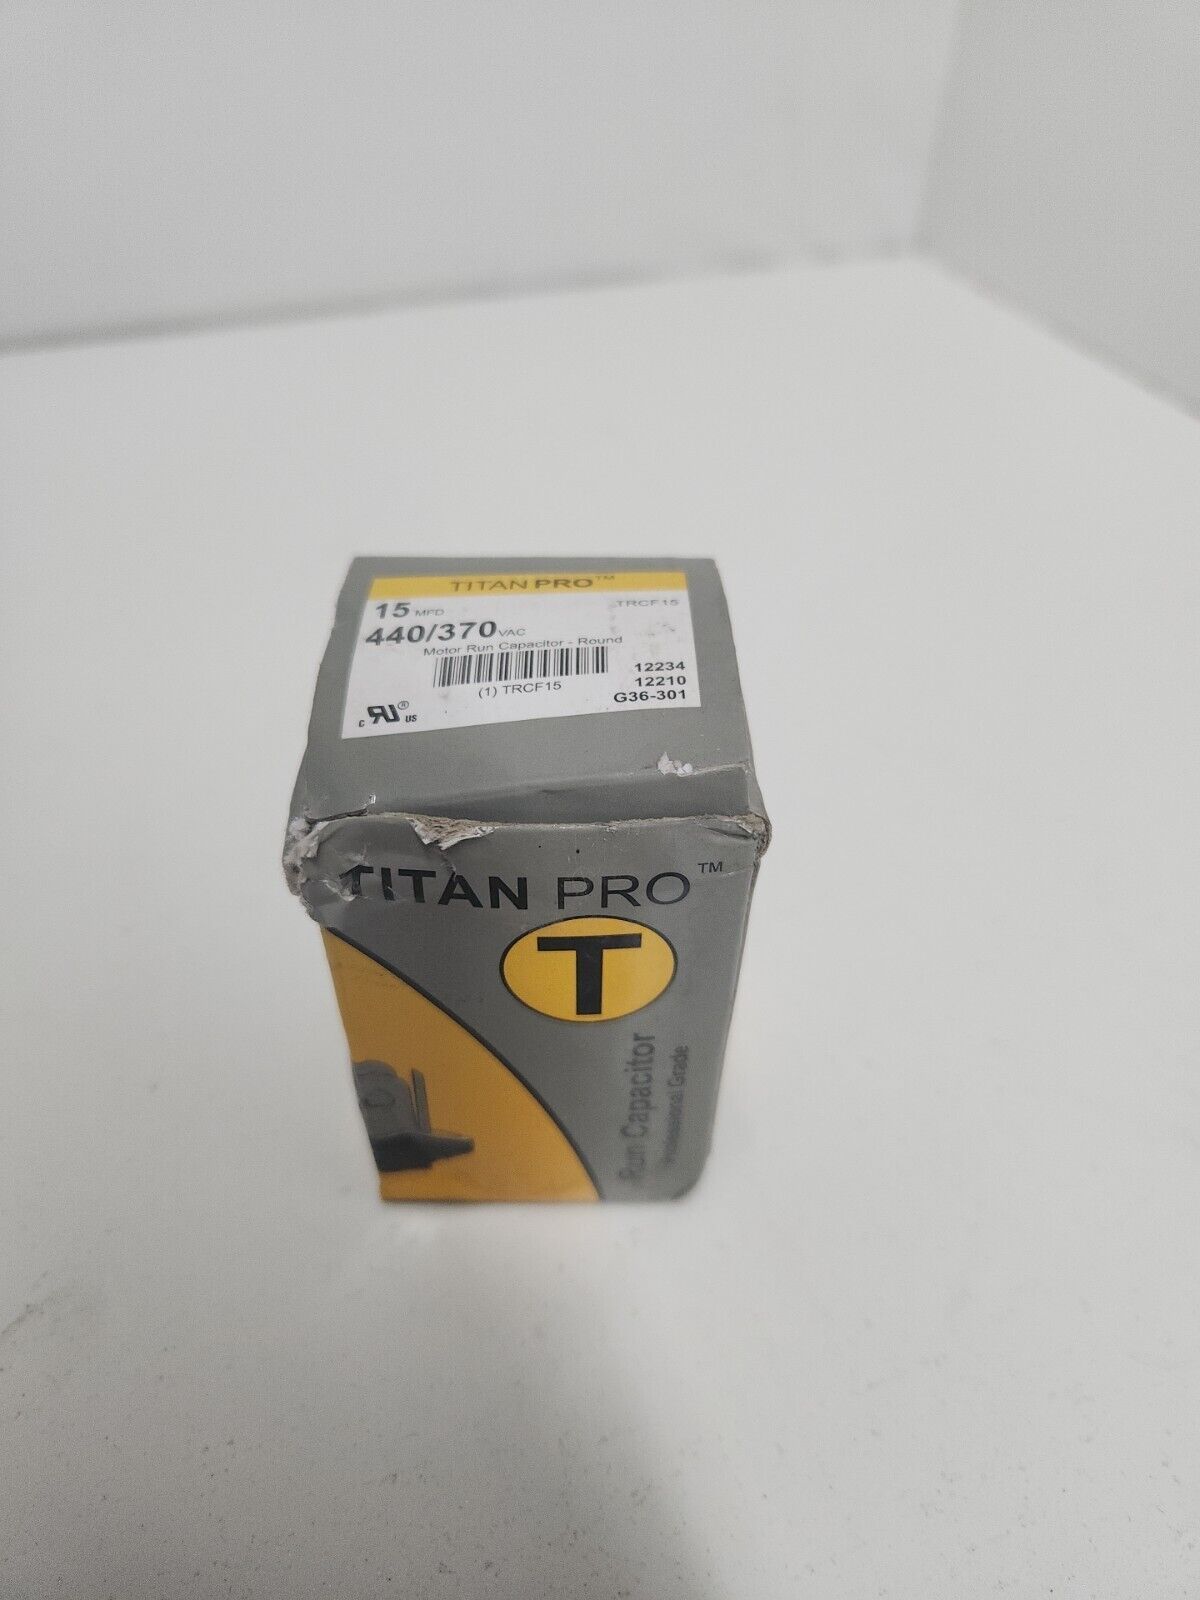 TitanPro TRCF15 HVAC Round Motor Run Capacitor. 15 MFD/UF 440/370 *OLD STOCK*